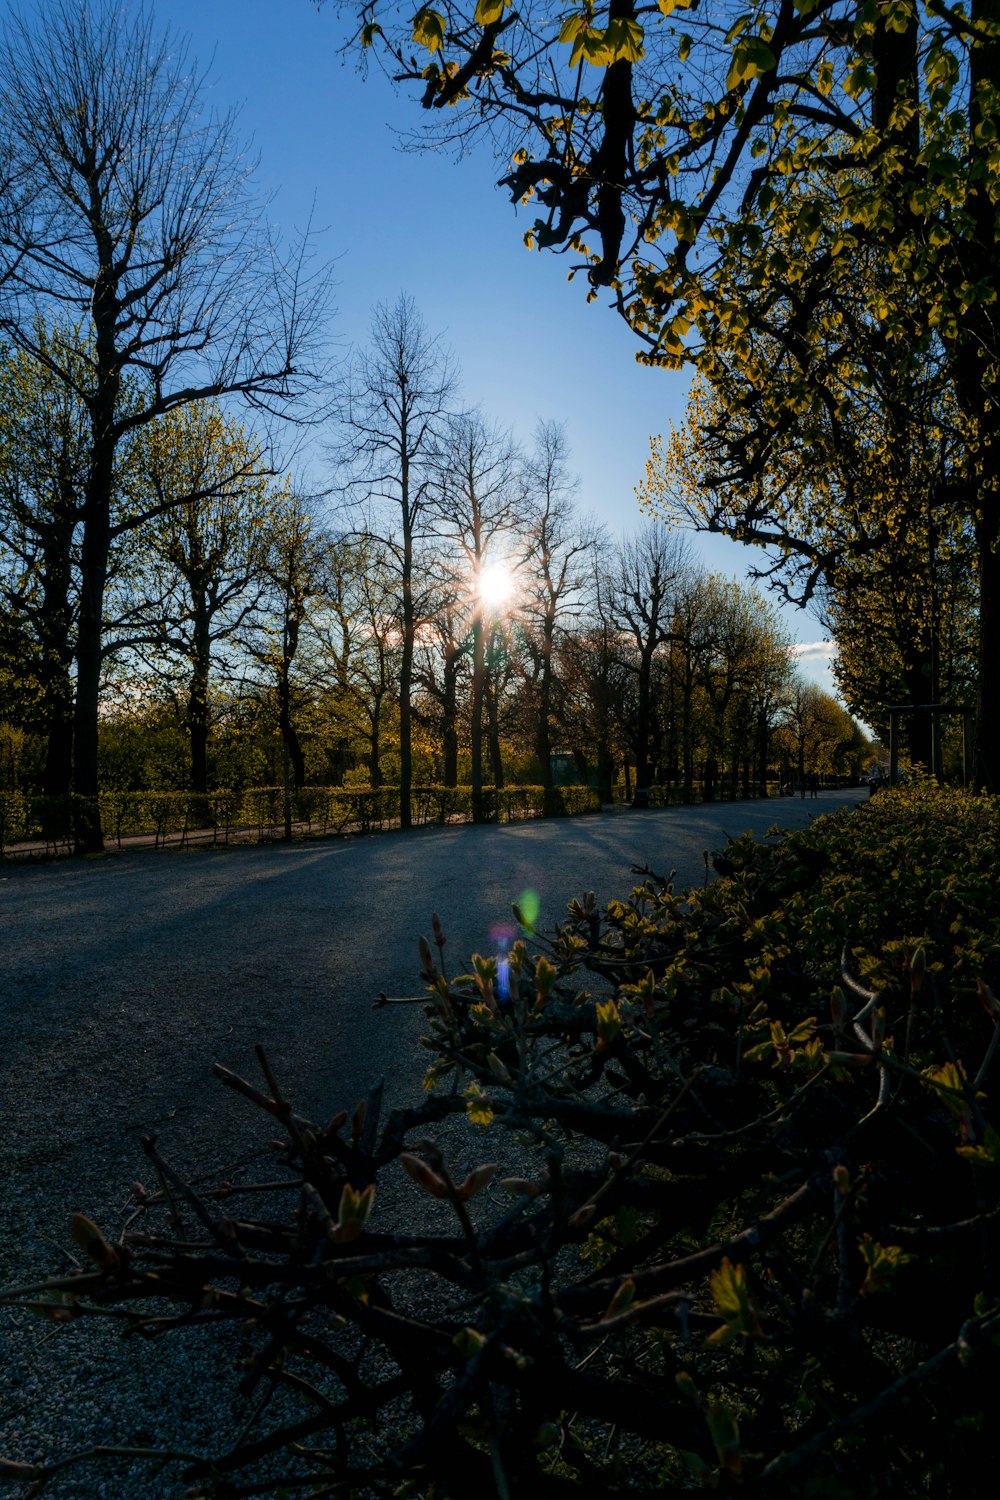 gray asphalt road between trees during daytime